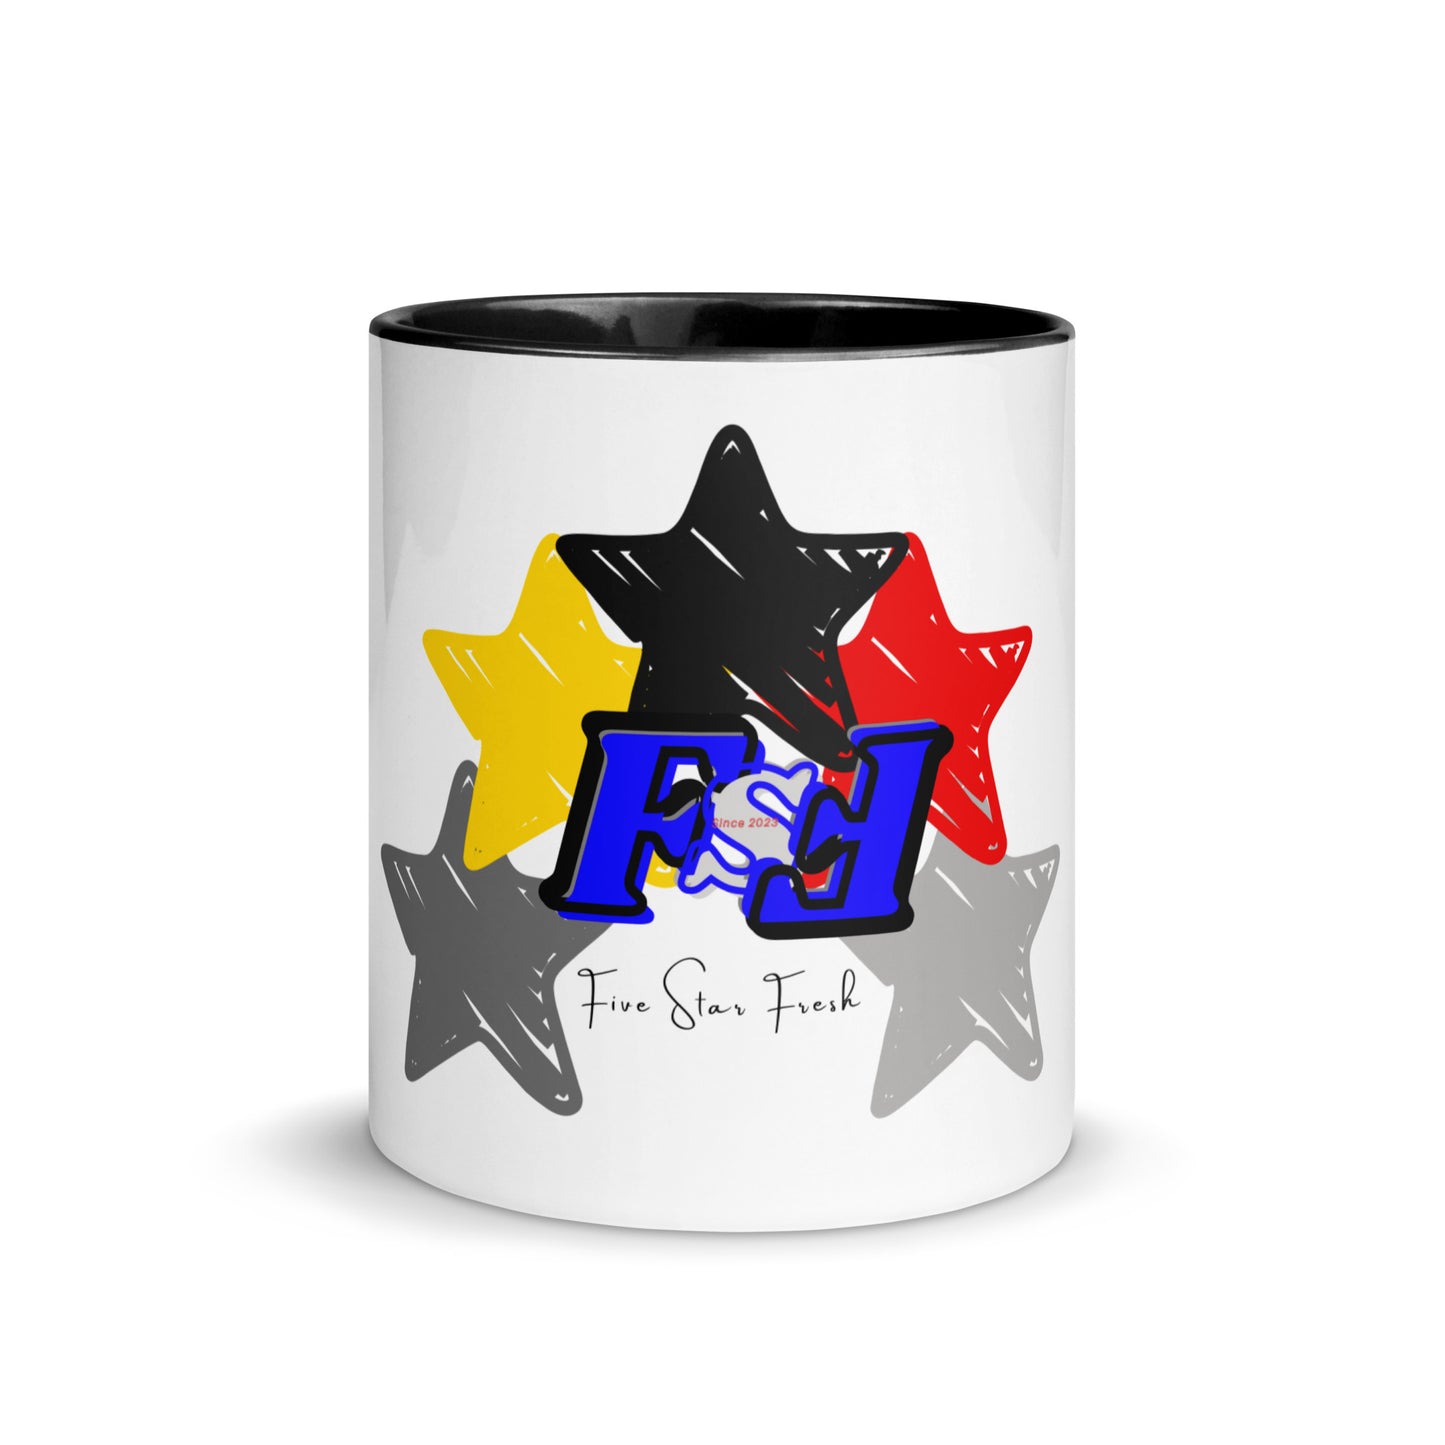 'Big Star' Dark - Five Star Fresh Mug with Color Inside